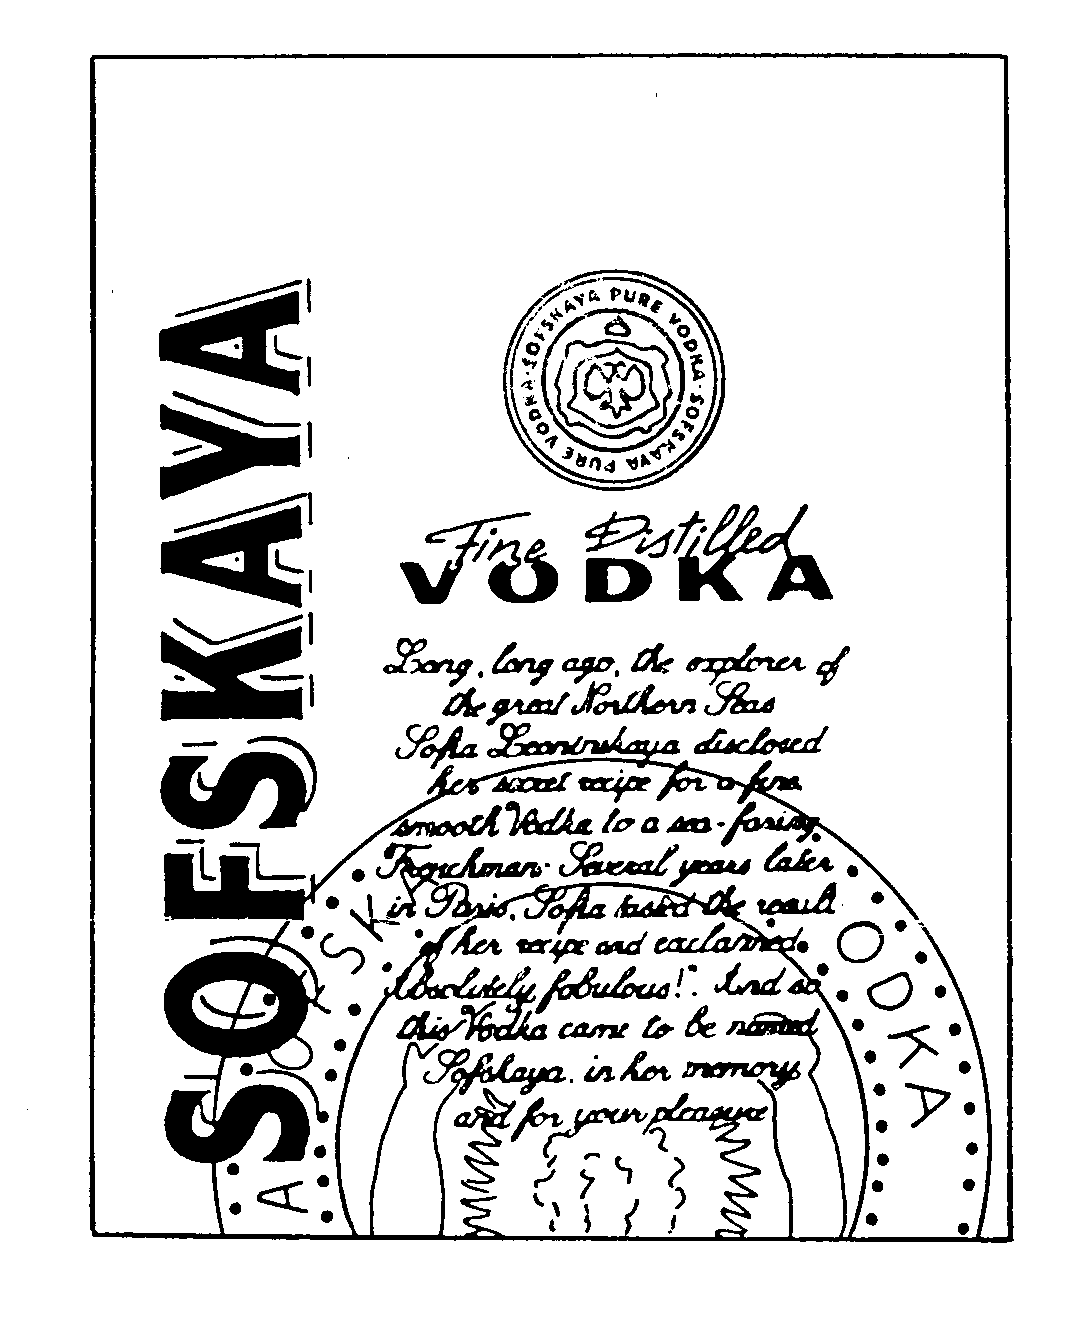  SOFSKAYA FINE DISTILLED VODKA SOFSKAYA PURE VODKA LONG, LONG AGO, THE EXPLORER OF THE GREAT NORTHERN SEAS, SOFIA LEONINSKAYA, DI